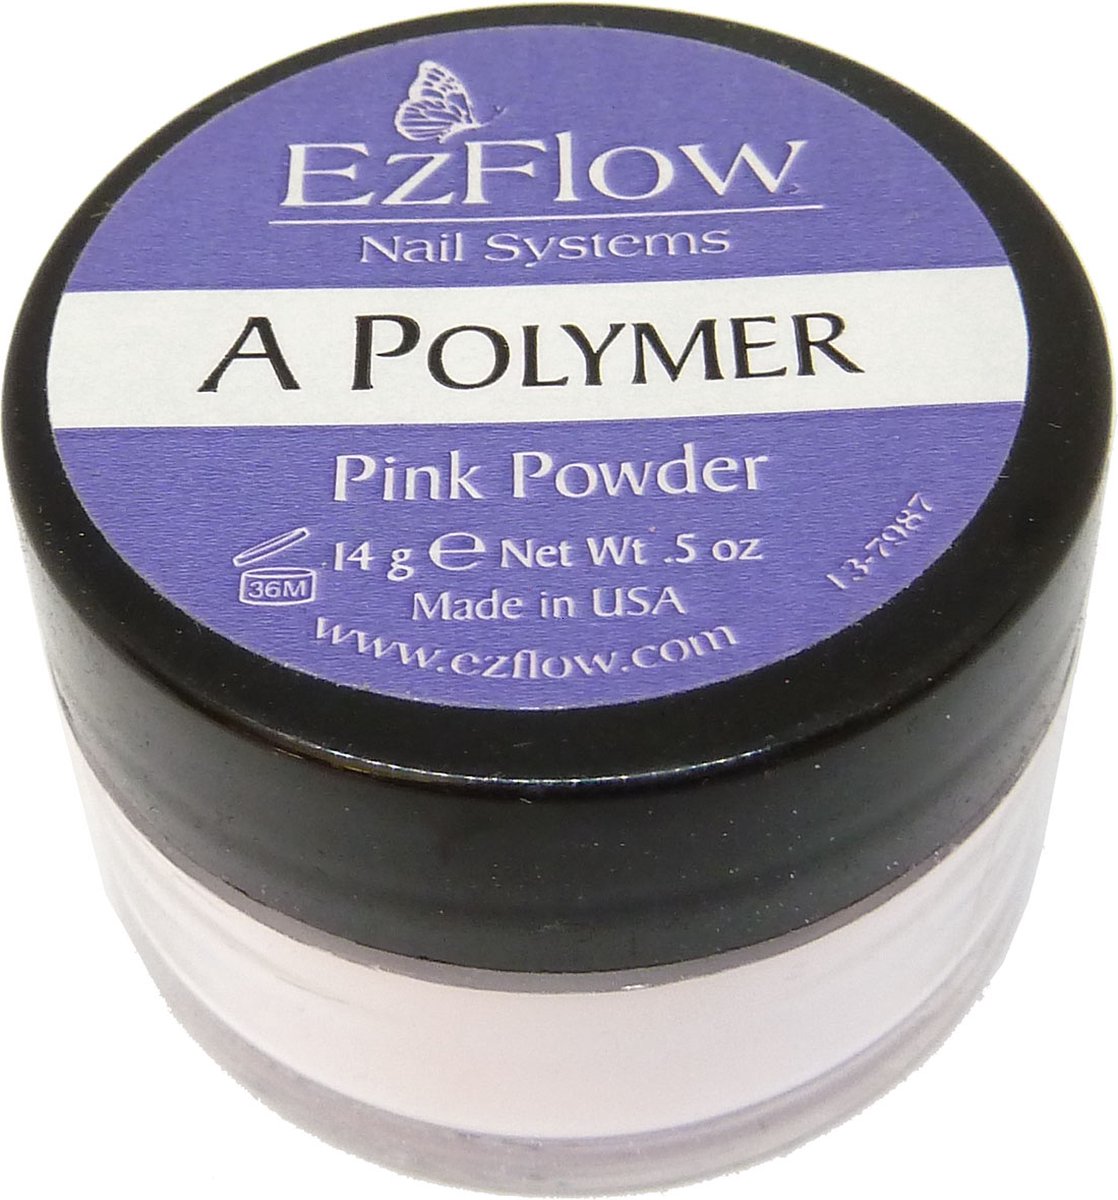 Ez Flow A Polymer Powder Acrylpoeder Manicure Nail Art Nagelverzorging 14g - Pink Powder Pink Powder